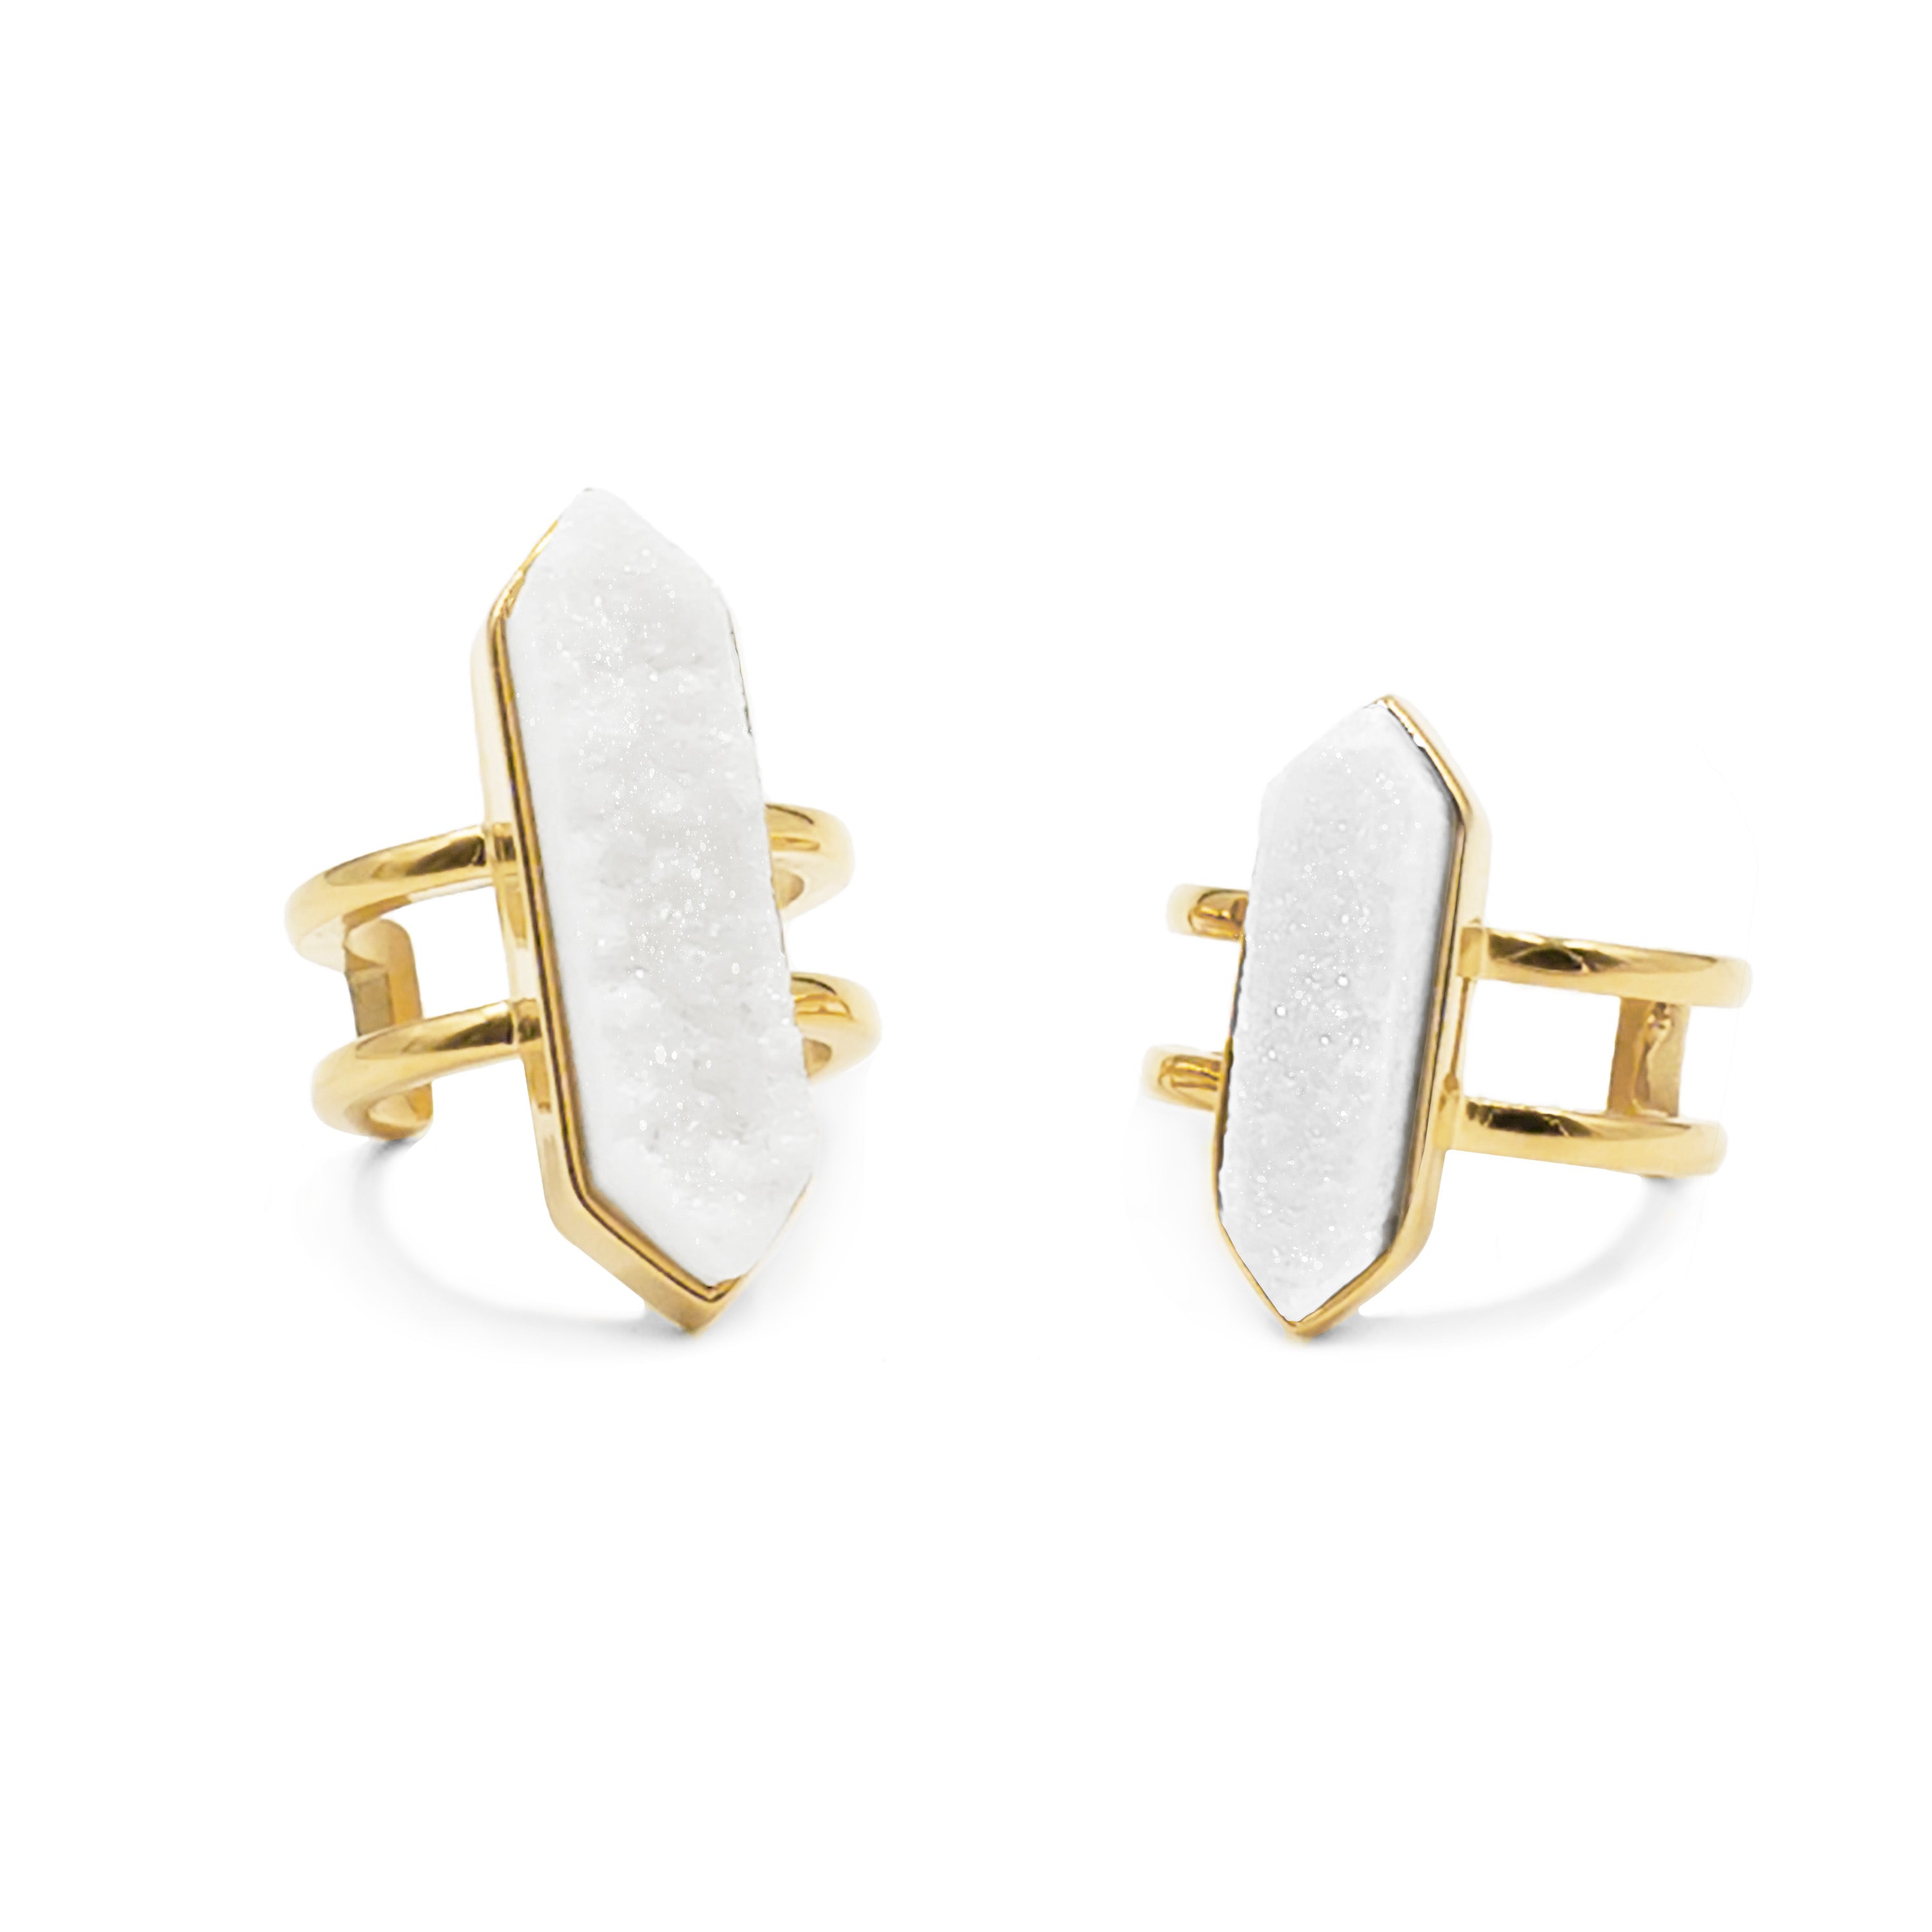 Bangle Collection - Quartz Ring Set fine designer jewelry for men and women